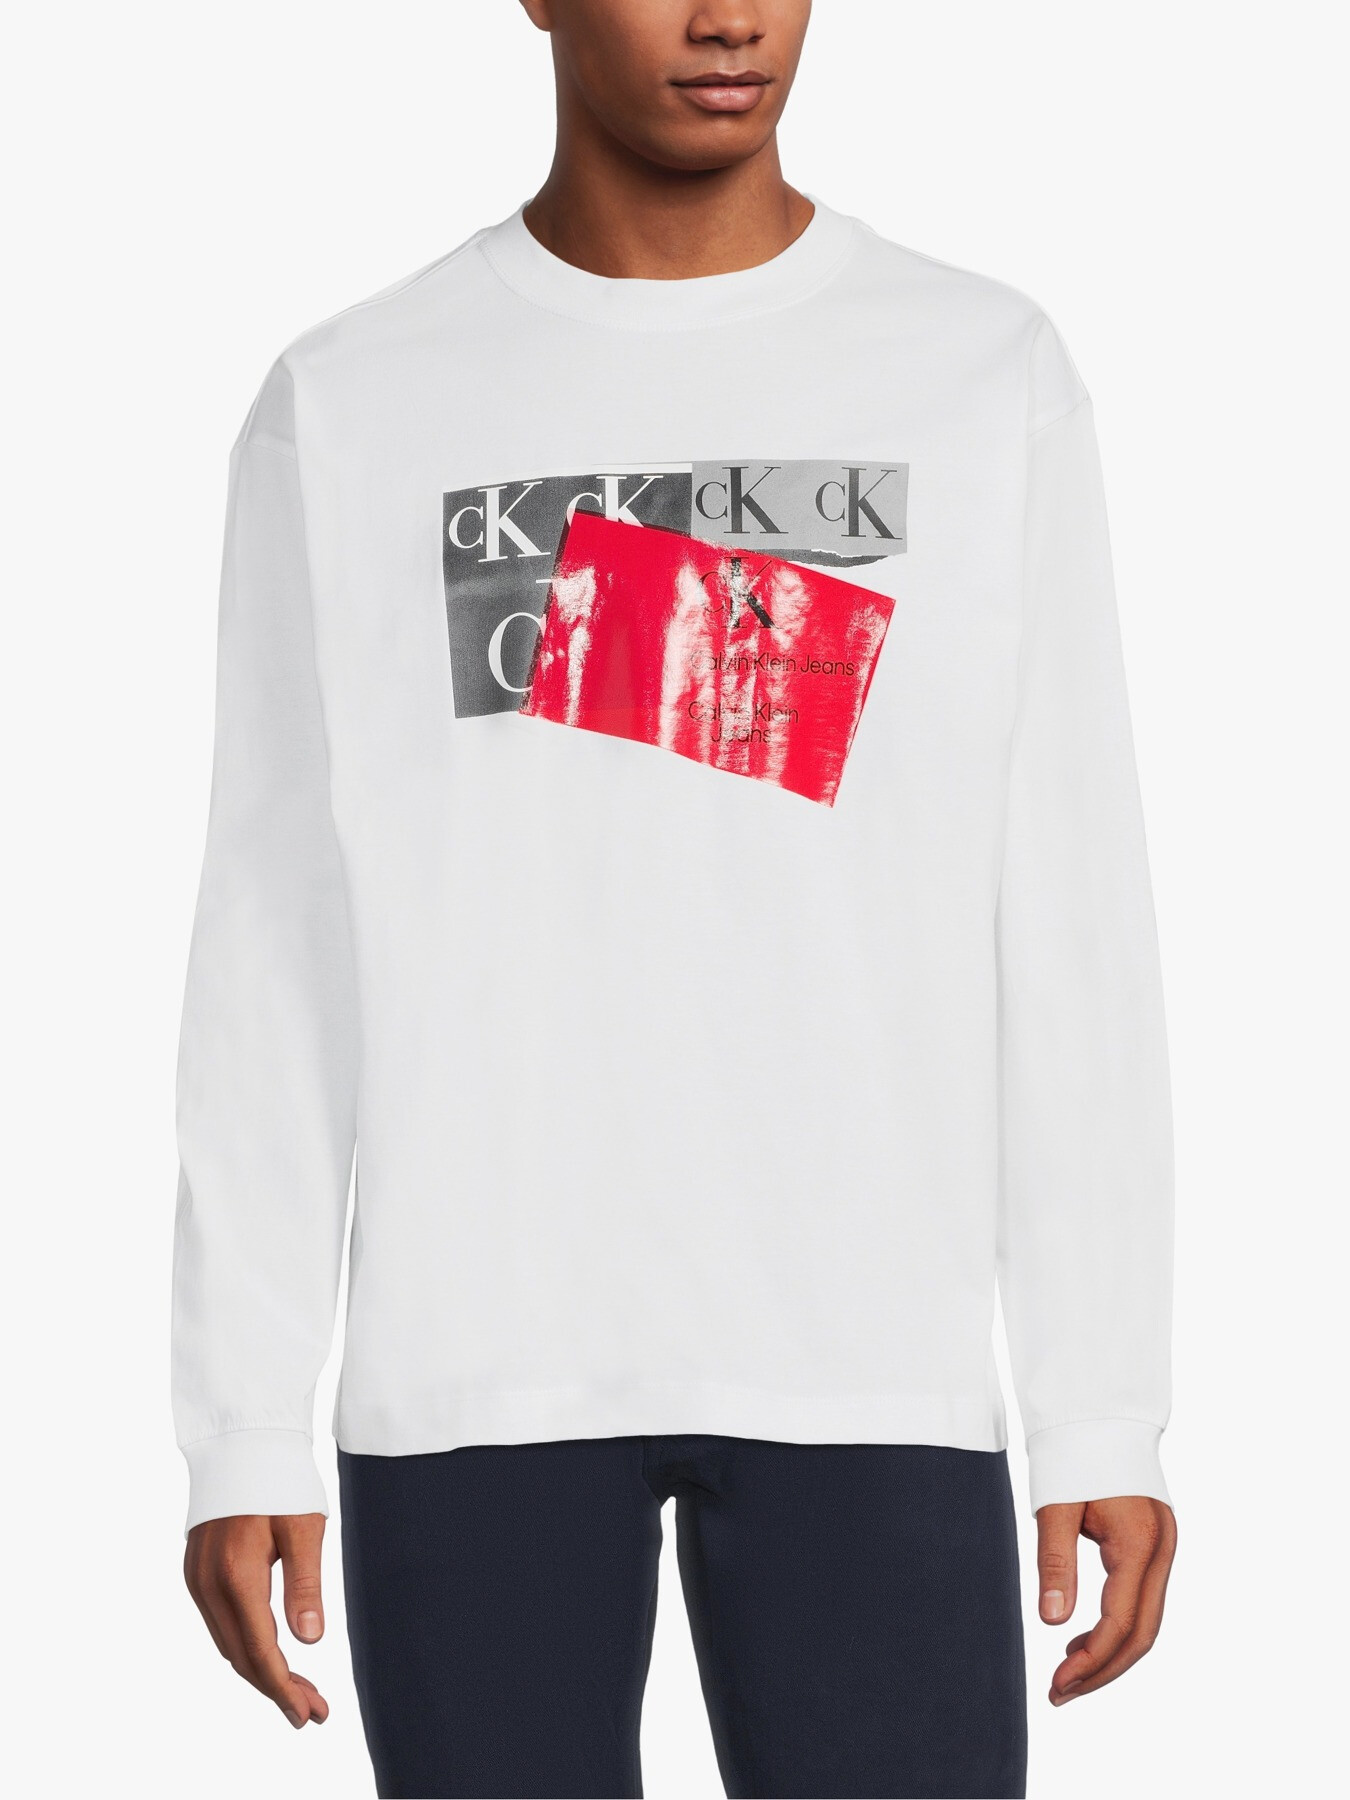 Calvin Klein Jeans Disrupted Monogram Sweatshirt Talla S Color